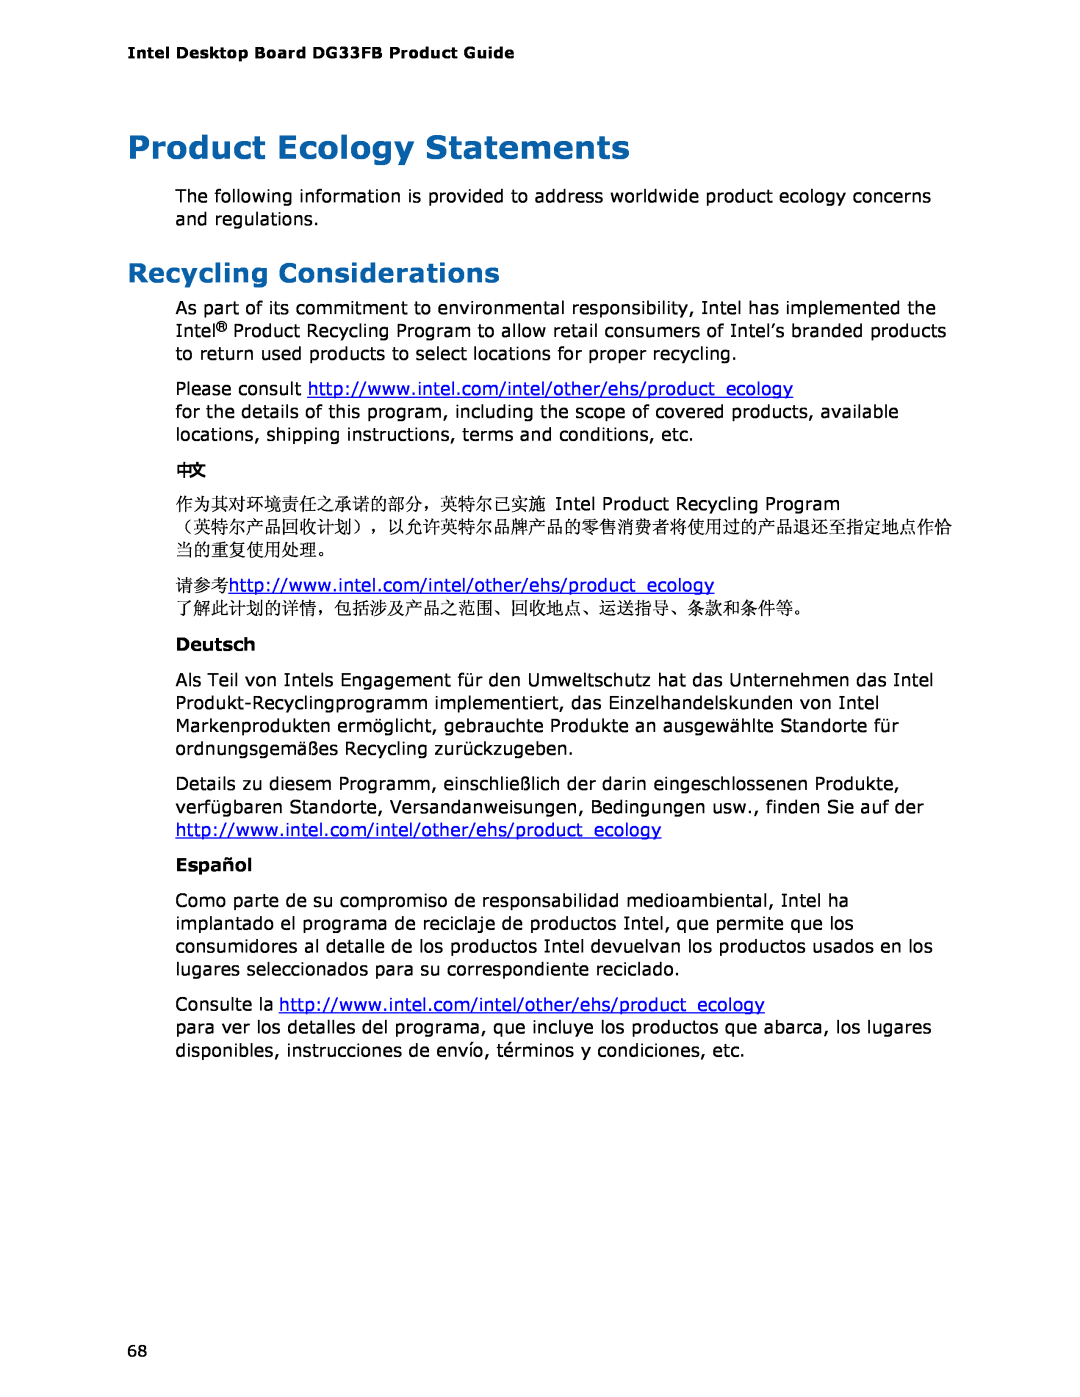 Intel DG33FB manual Product Ecology Statements, Recycling Considerations, Deutsch, Español 